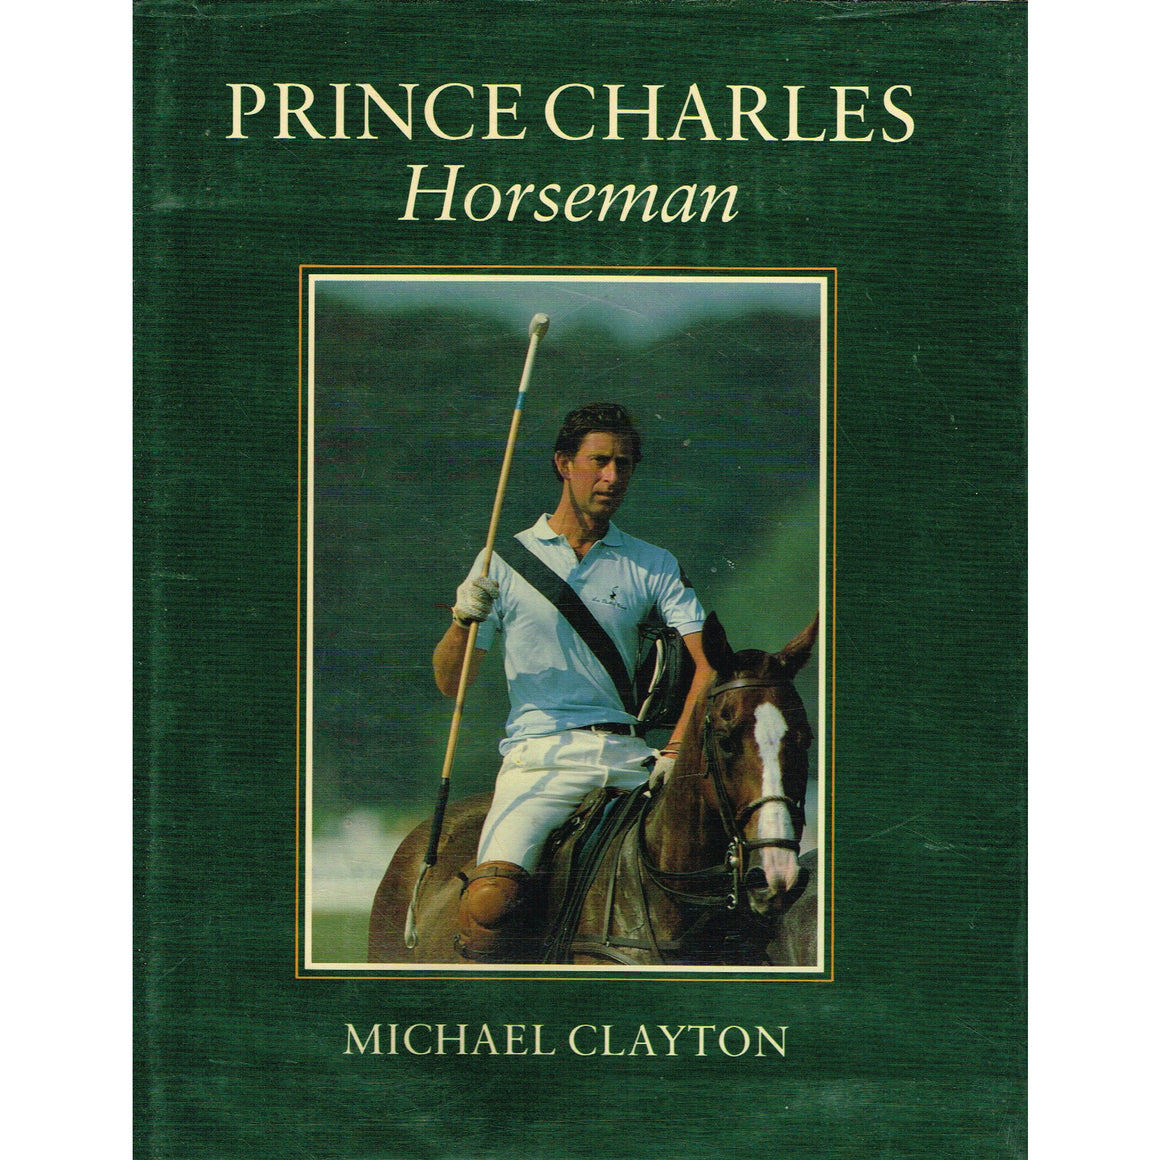 Prince Charles Horseman